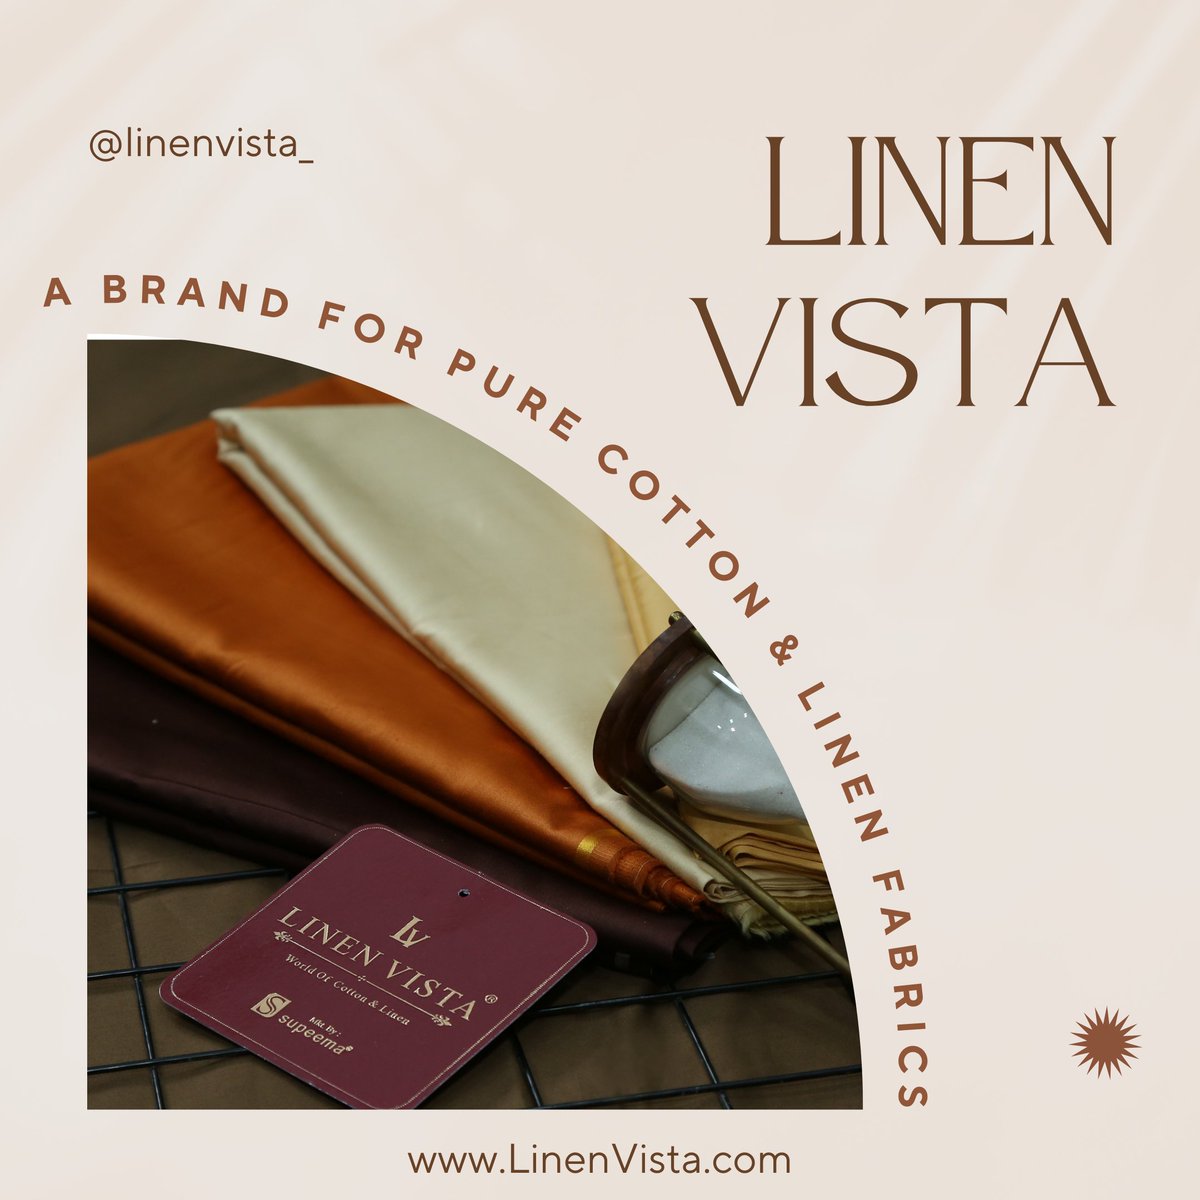 #LinenVista - Fabrics that are made for all occasions.
.
LinenVista.com
.
#CottonFabric #LinenFabric #CottonSuiting #WhiteCotton #CottonShirting #LustreCotton #PureCotton #GizaCotton #LawnCotton #CottonEmbriodery #LinenFabric #LinenClothing #LinenDigital #SoftLinen